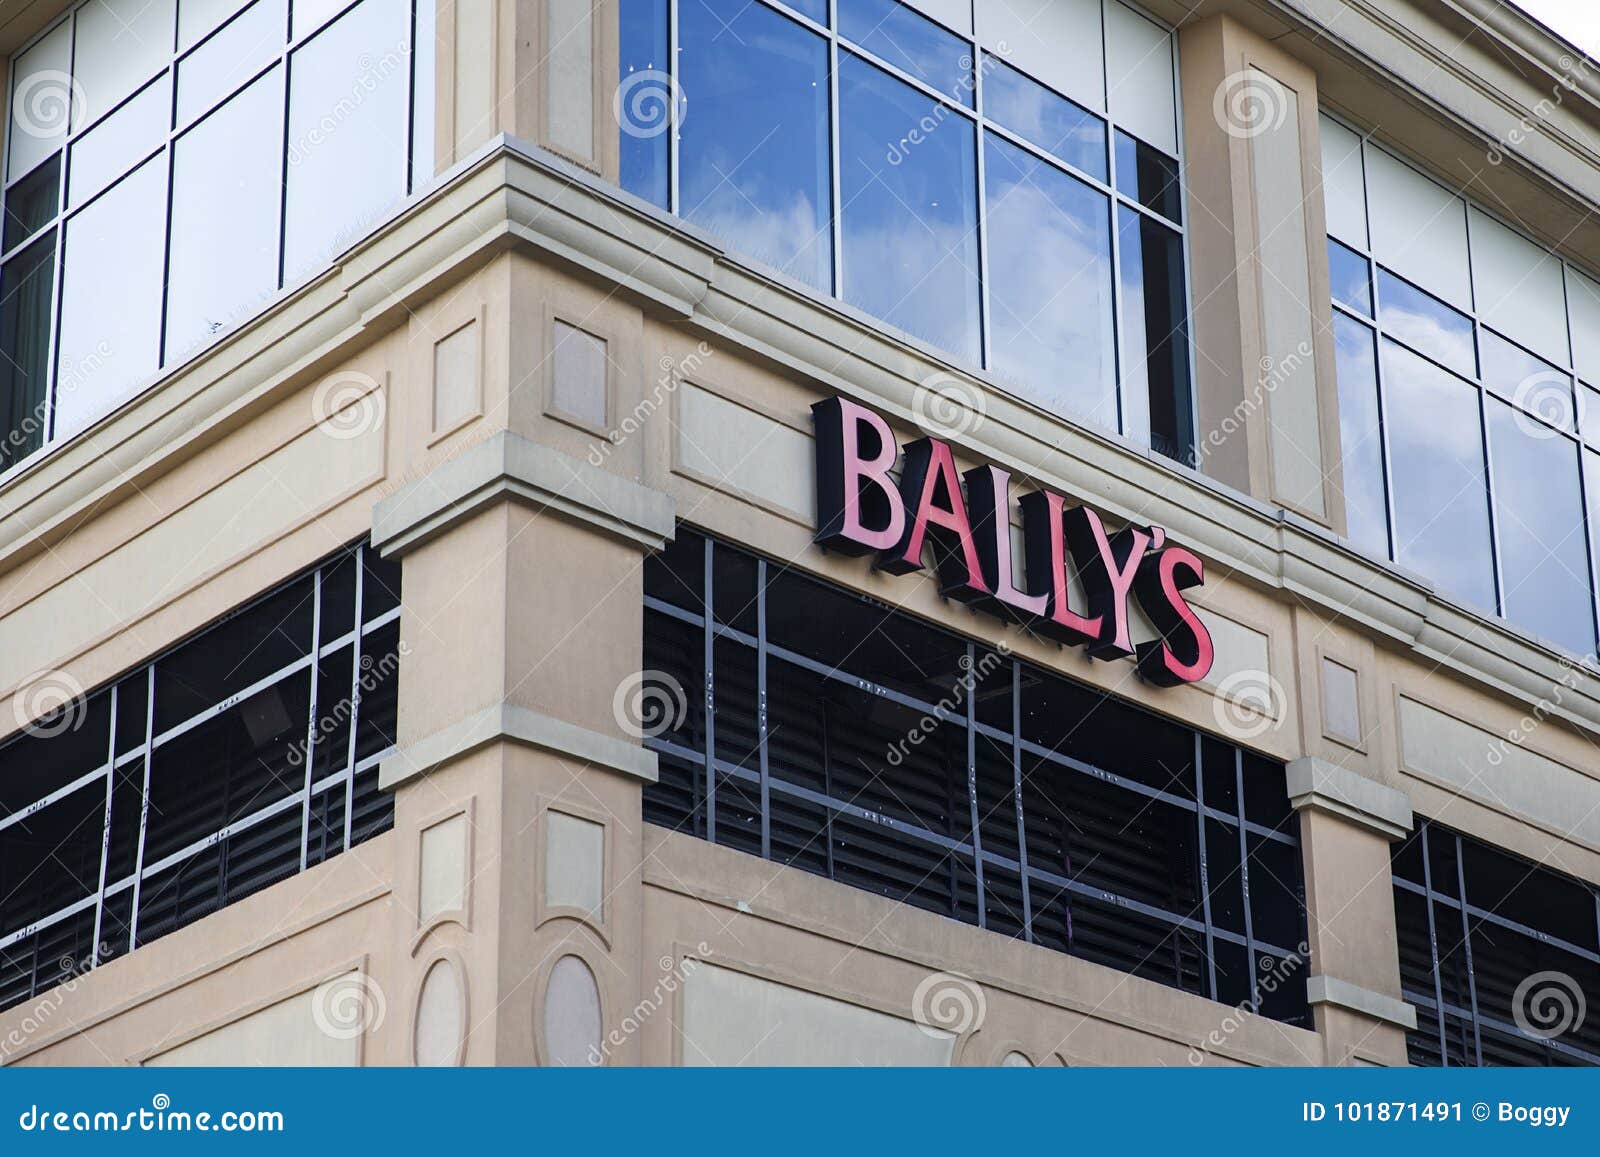 Bally S Atlantic City Editorial Photo Image Of Rooms